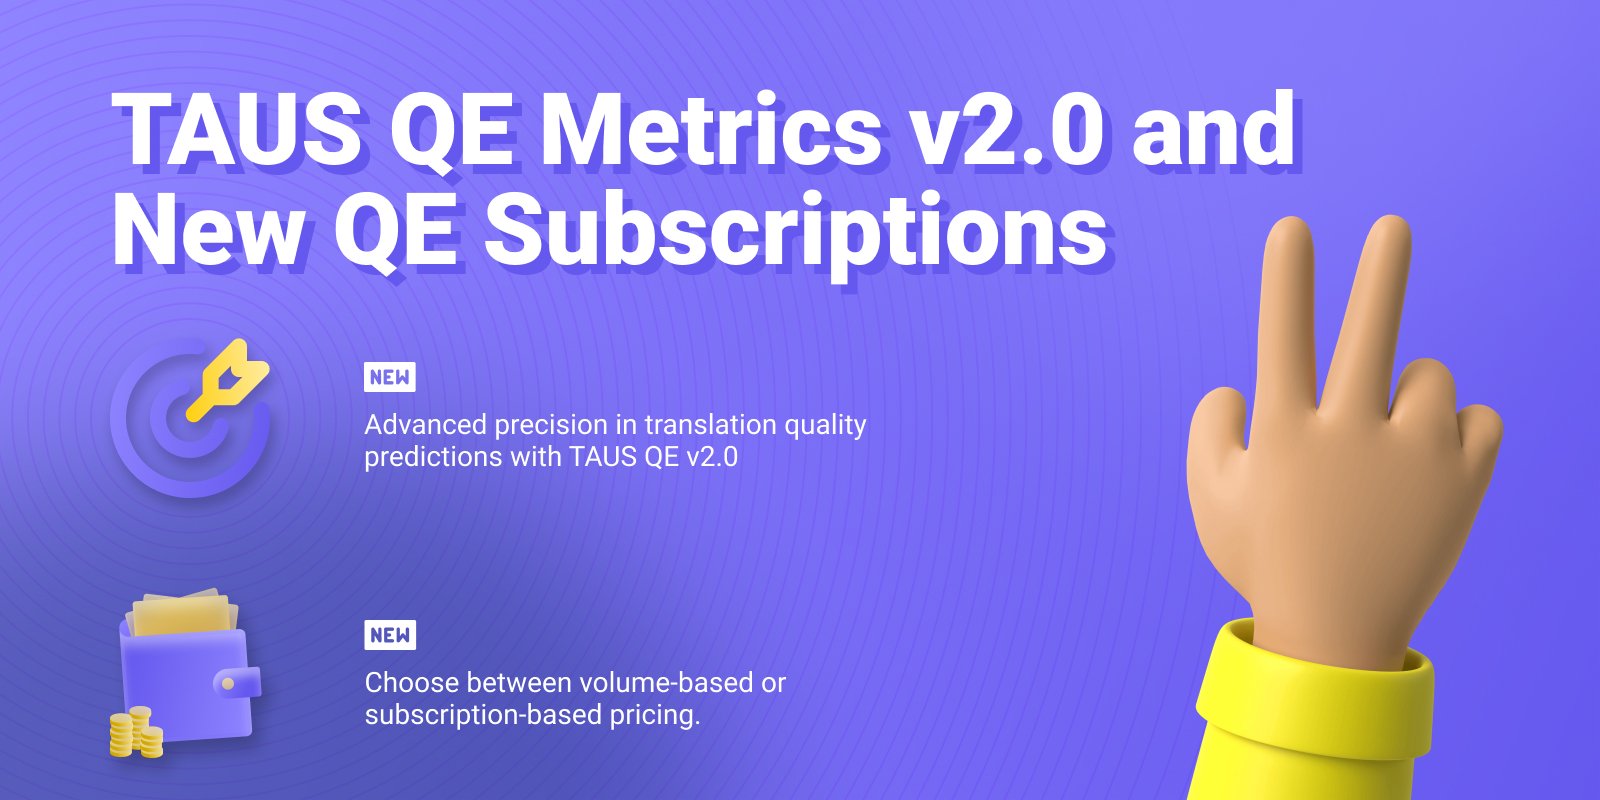 taus-qe-metrics-v2.0-and-new-qe-subscriptions